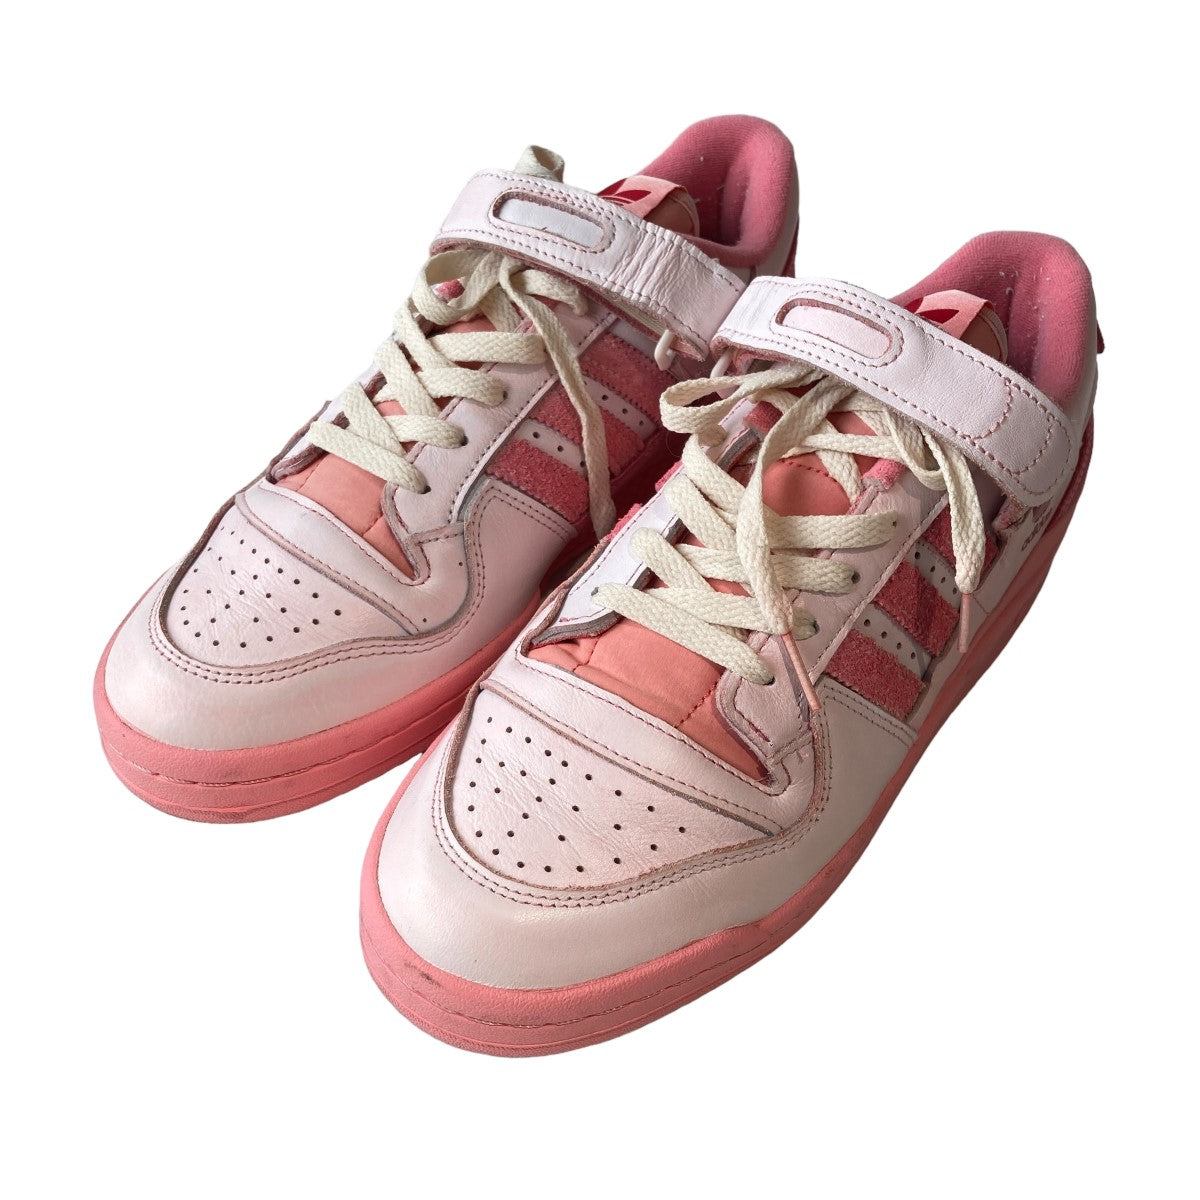 adidas(アディダス) Forum 84 Low Pink at Home GY6980 ピンク サイズ 13｜【公式】カインドオルオンライン  ブランド古着・中古通販【kindal】